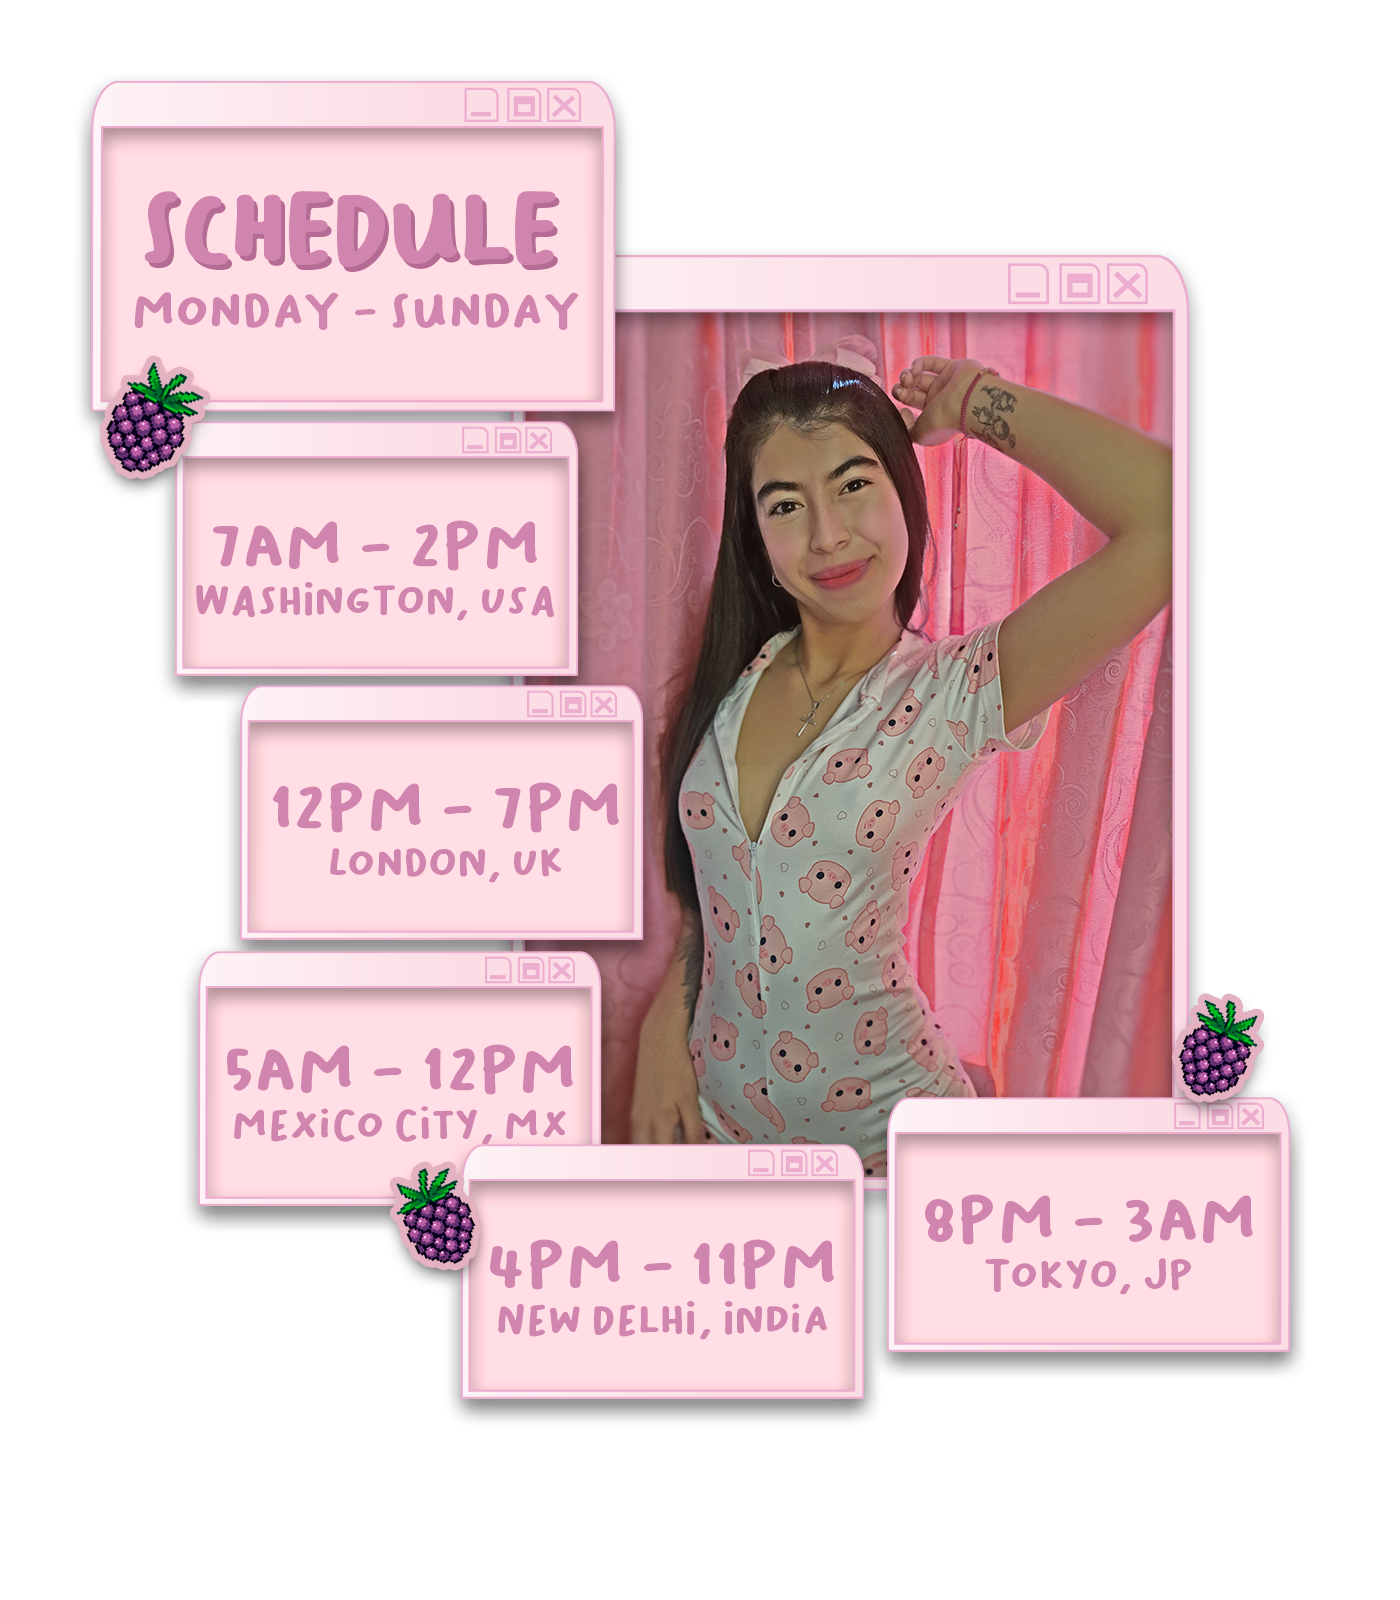 Morita-J My schedule image: 1